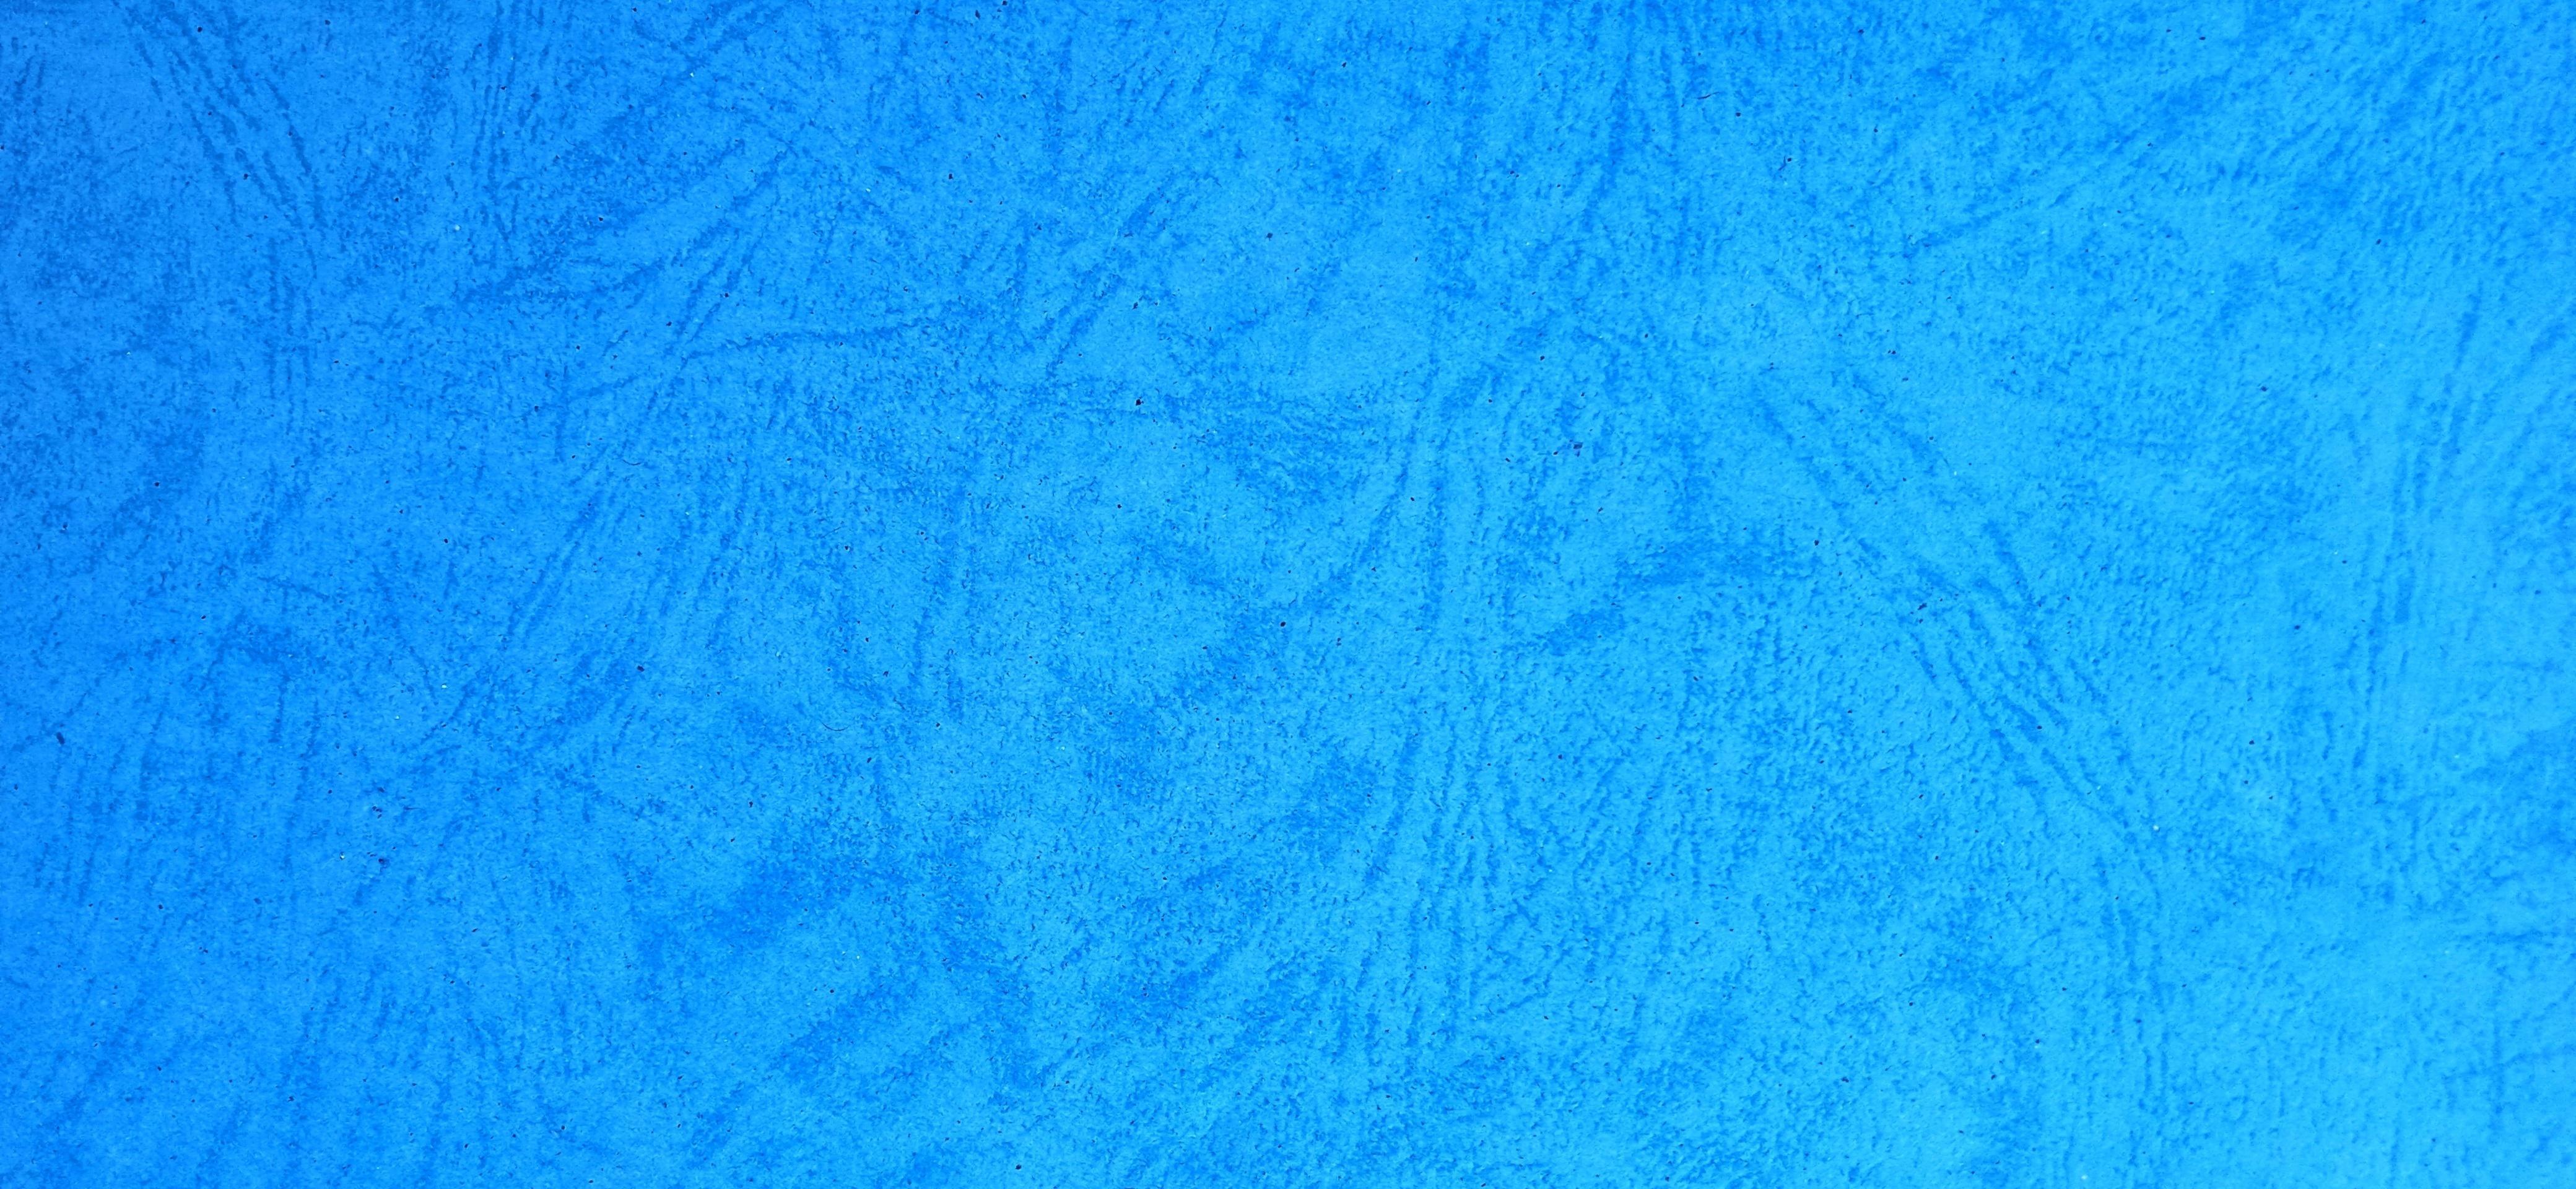 Light Blue Construction Paper Texture Picture, Free Photograph